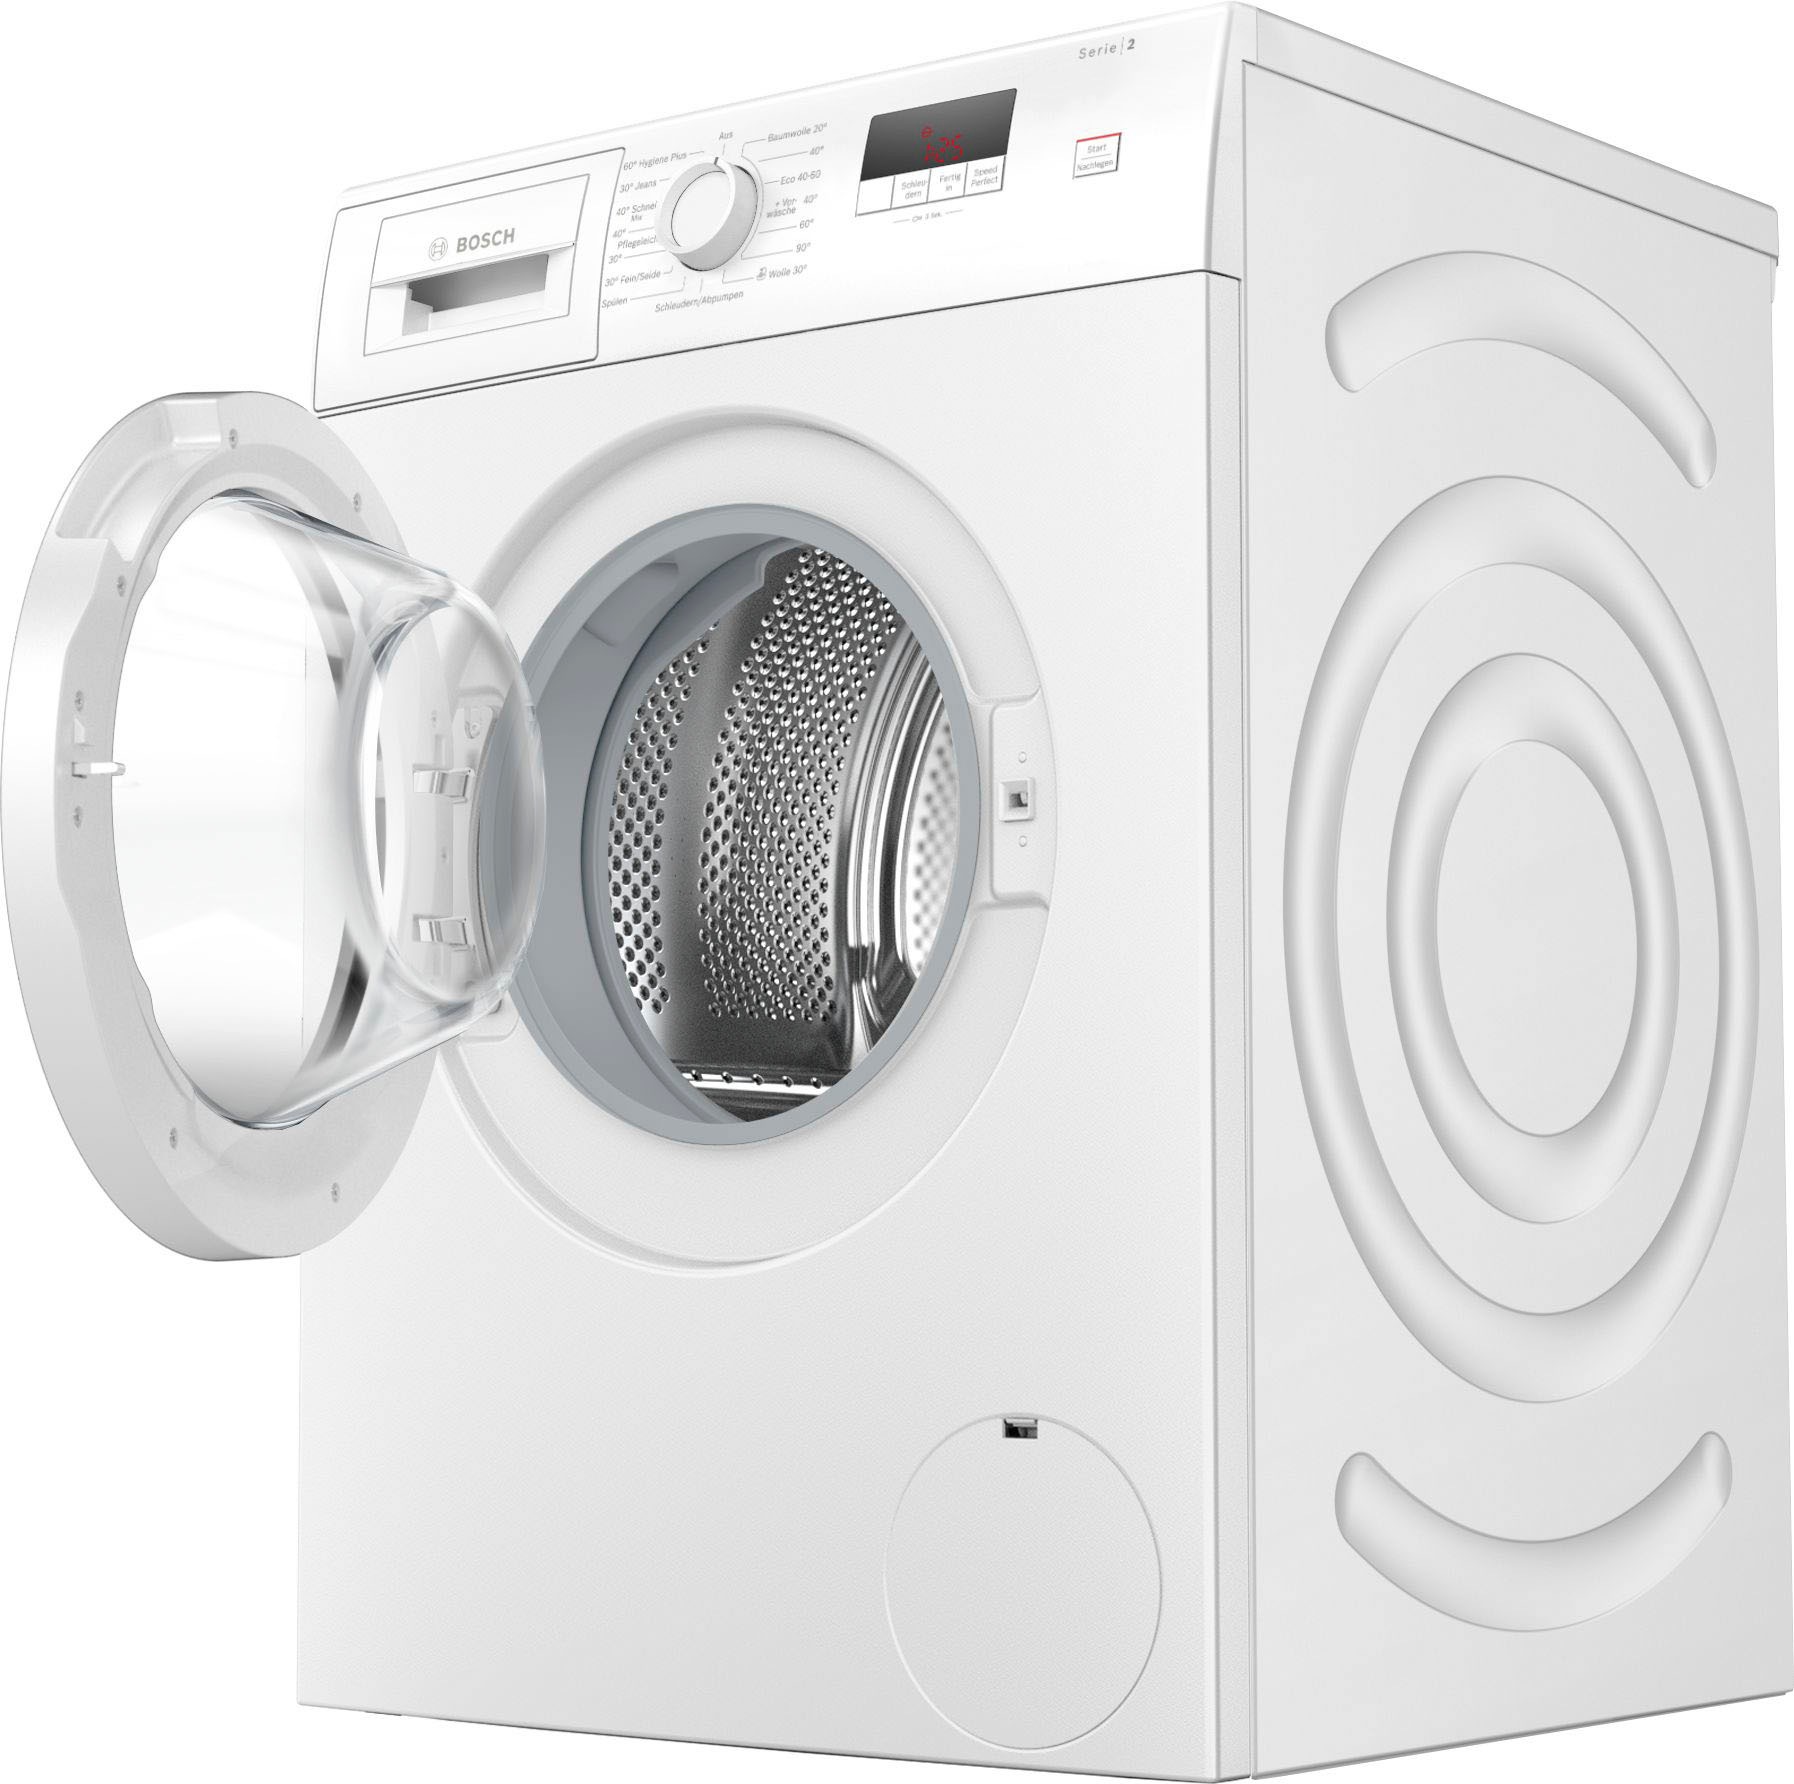 BOSCH Waschmaschine »WAJ280V3«, Jahren Garantie U/min mit XXL 7 WAJ280V3, 1400 3 Serie kg, 2